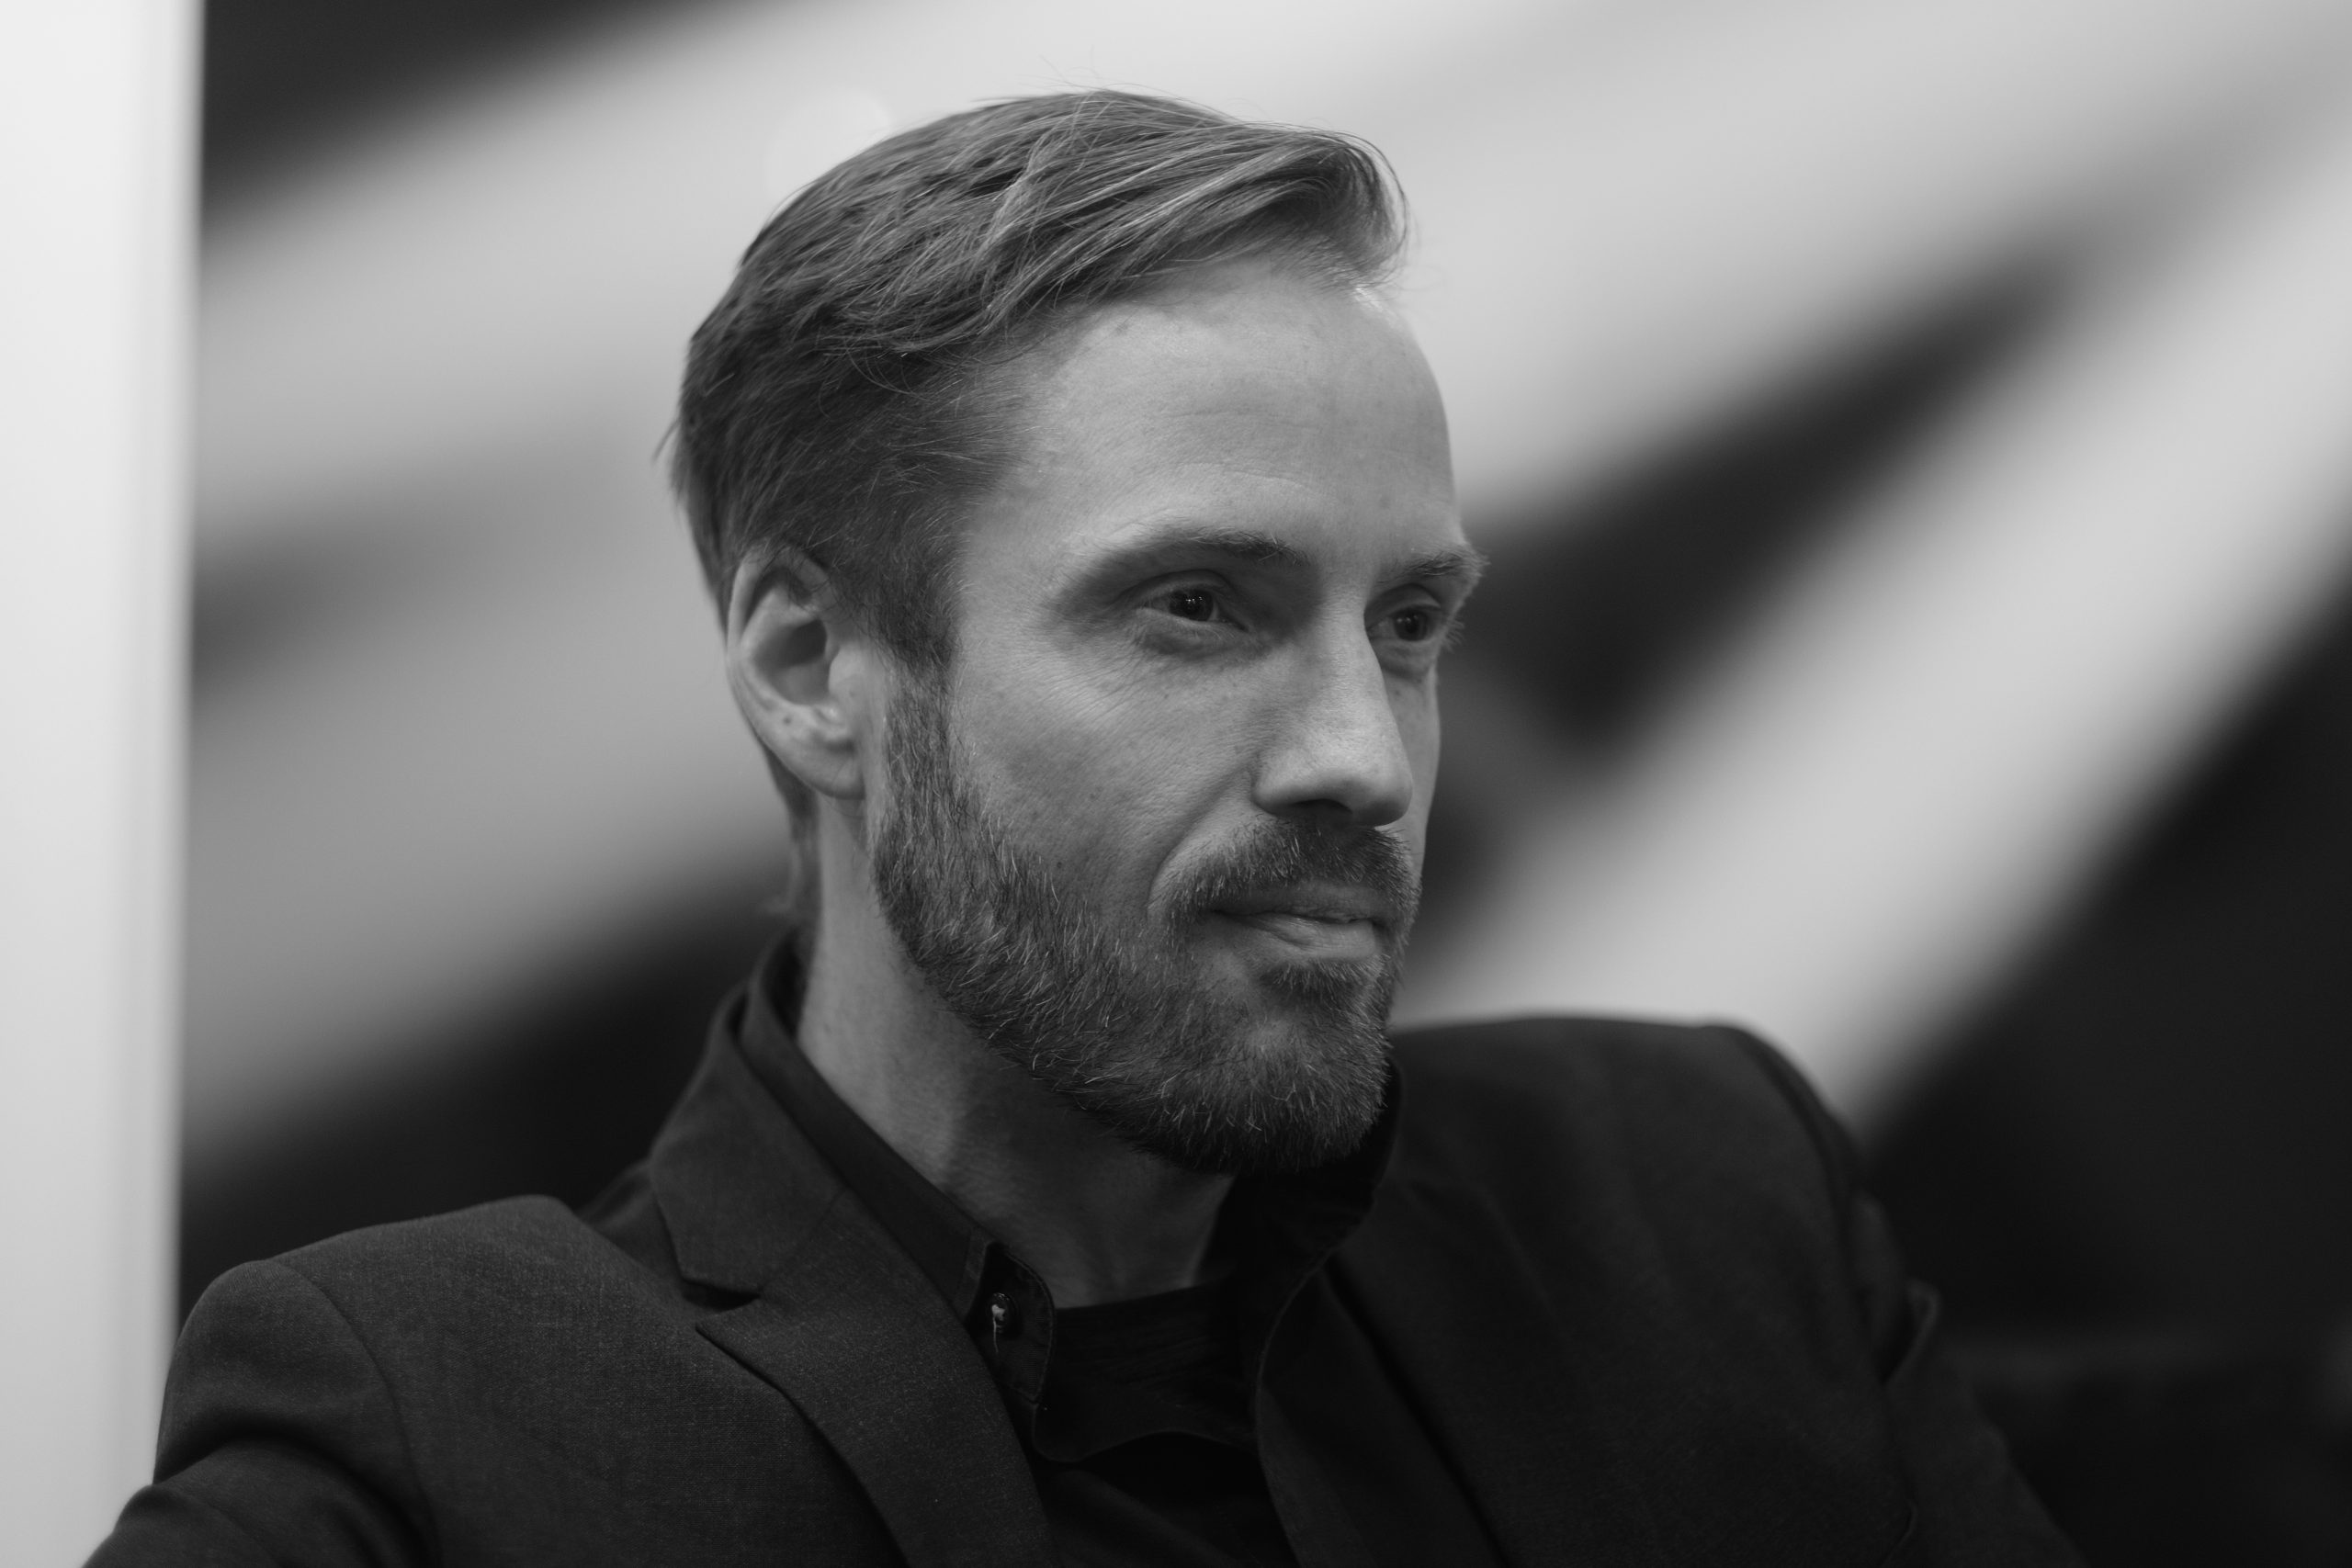 Bild på Tobias Nyberg, profil, svart/vit